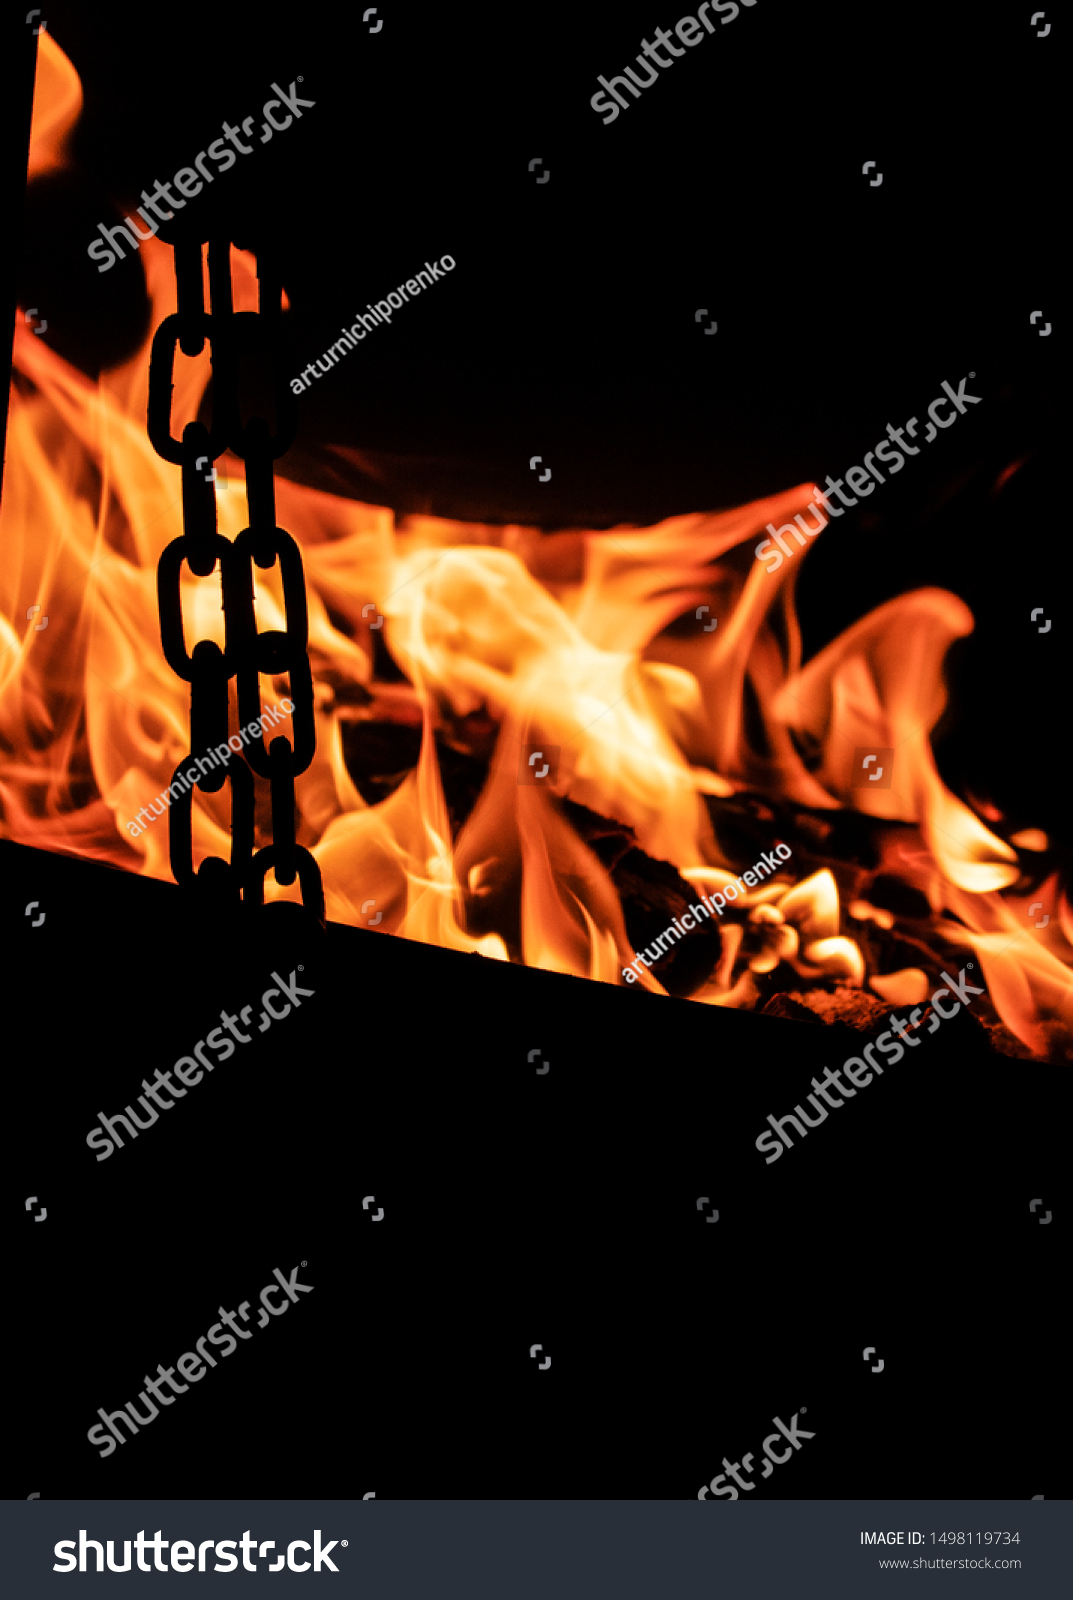 cauldron of fire